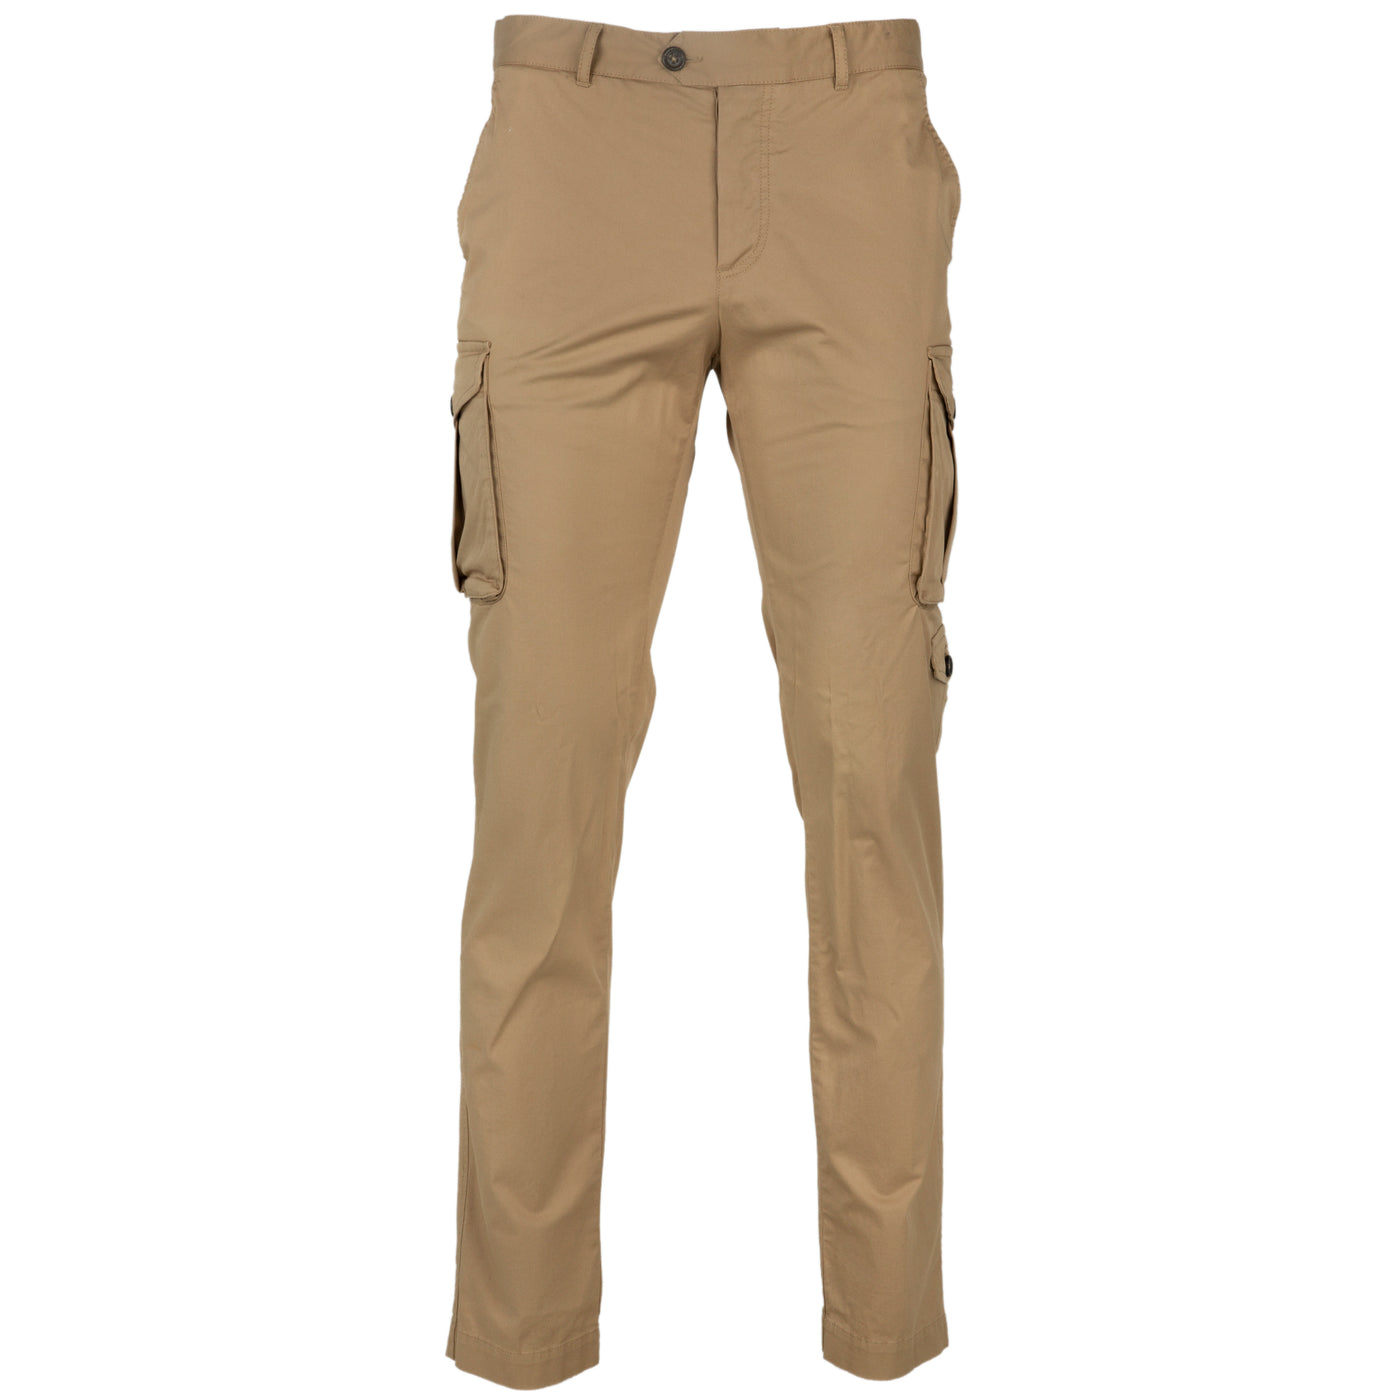 Men's Serengeti Cargo Pants